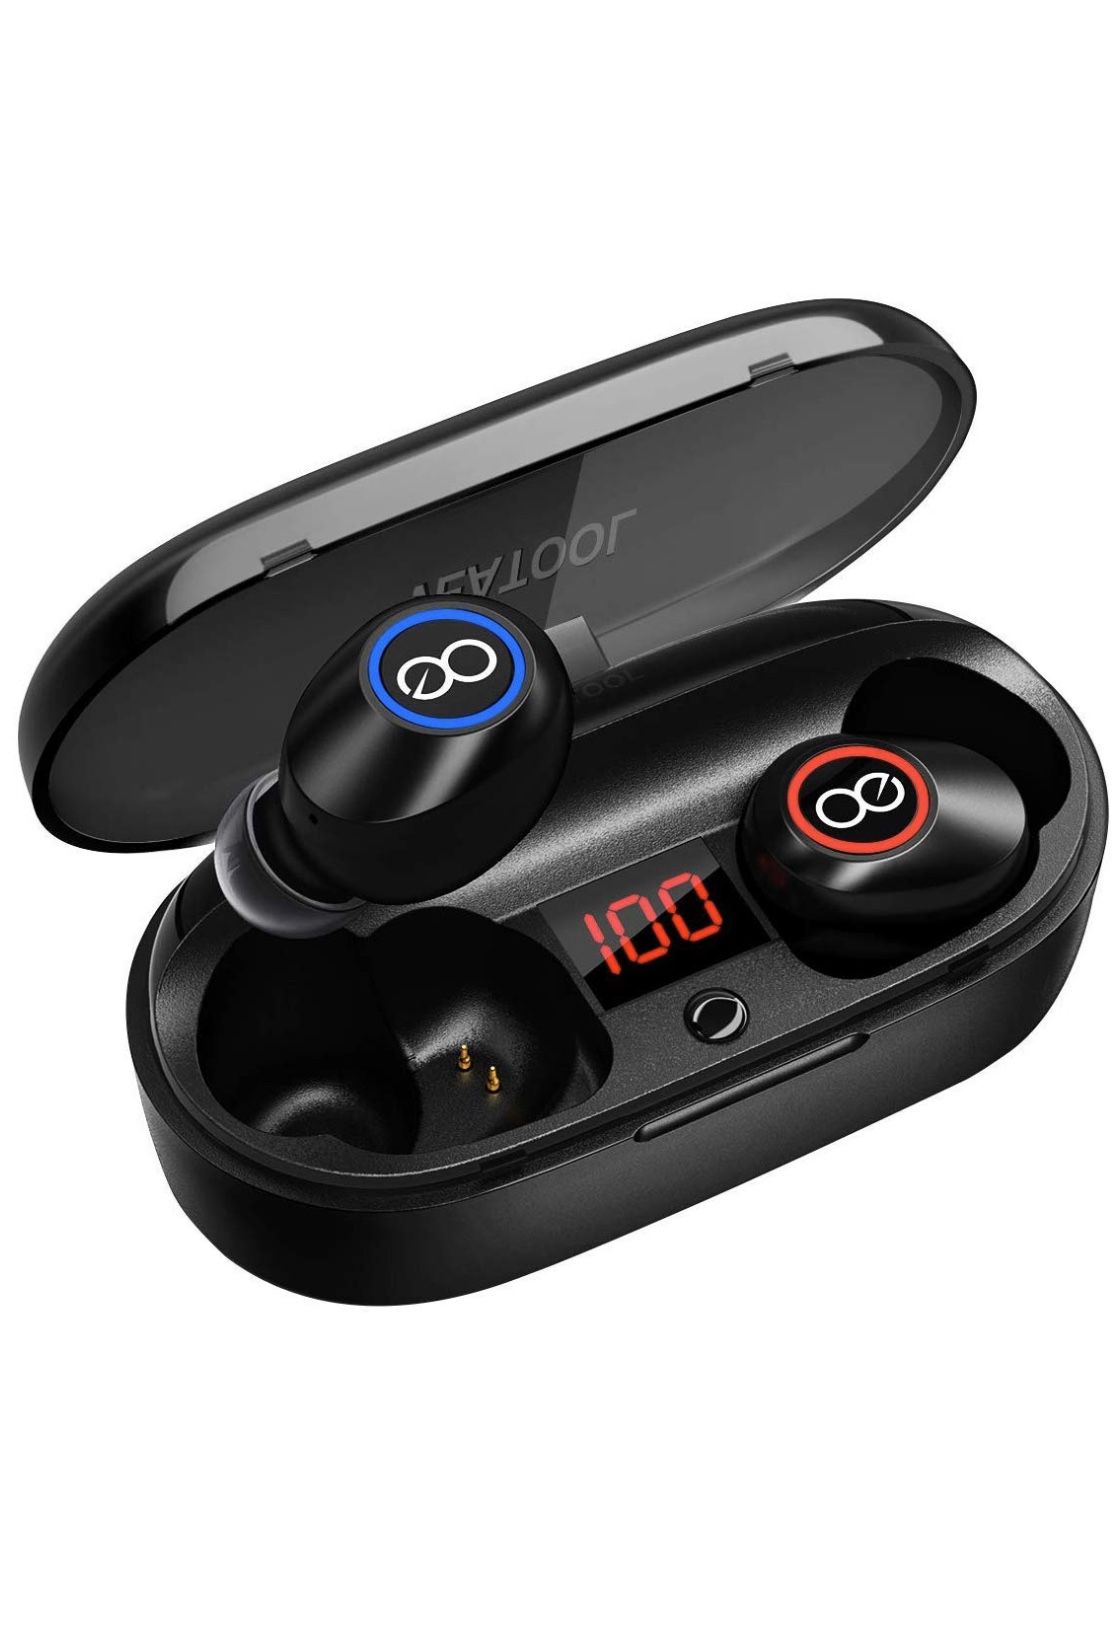 Wireless Ear Buds Wireless Headphones Bluetooth 5.0 Waterproof Earbuds Built-in Mic with 500mAh Charging Case